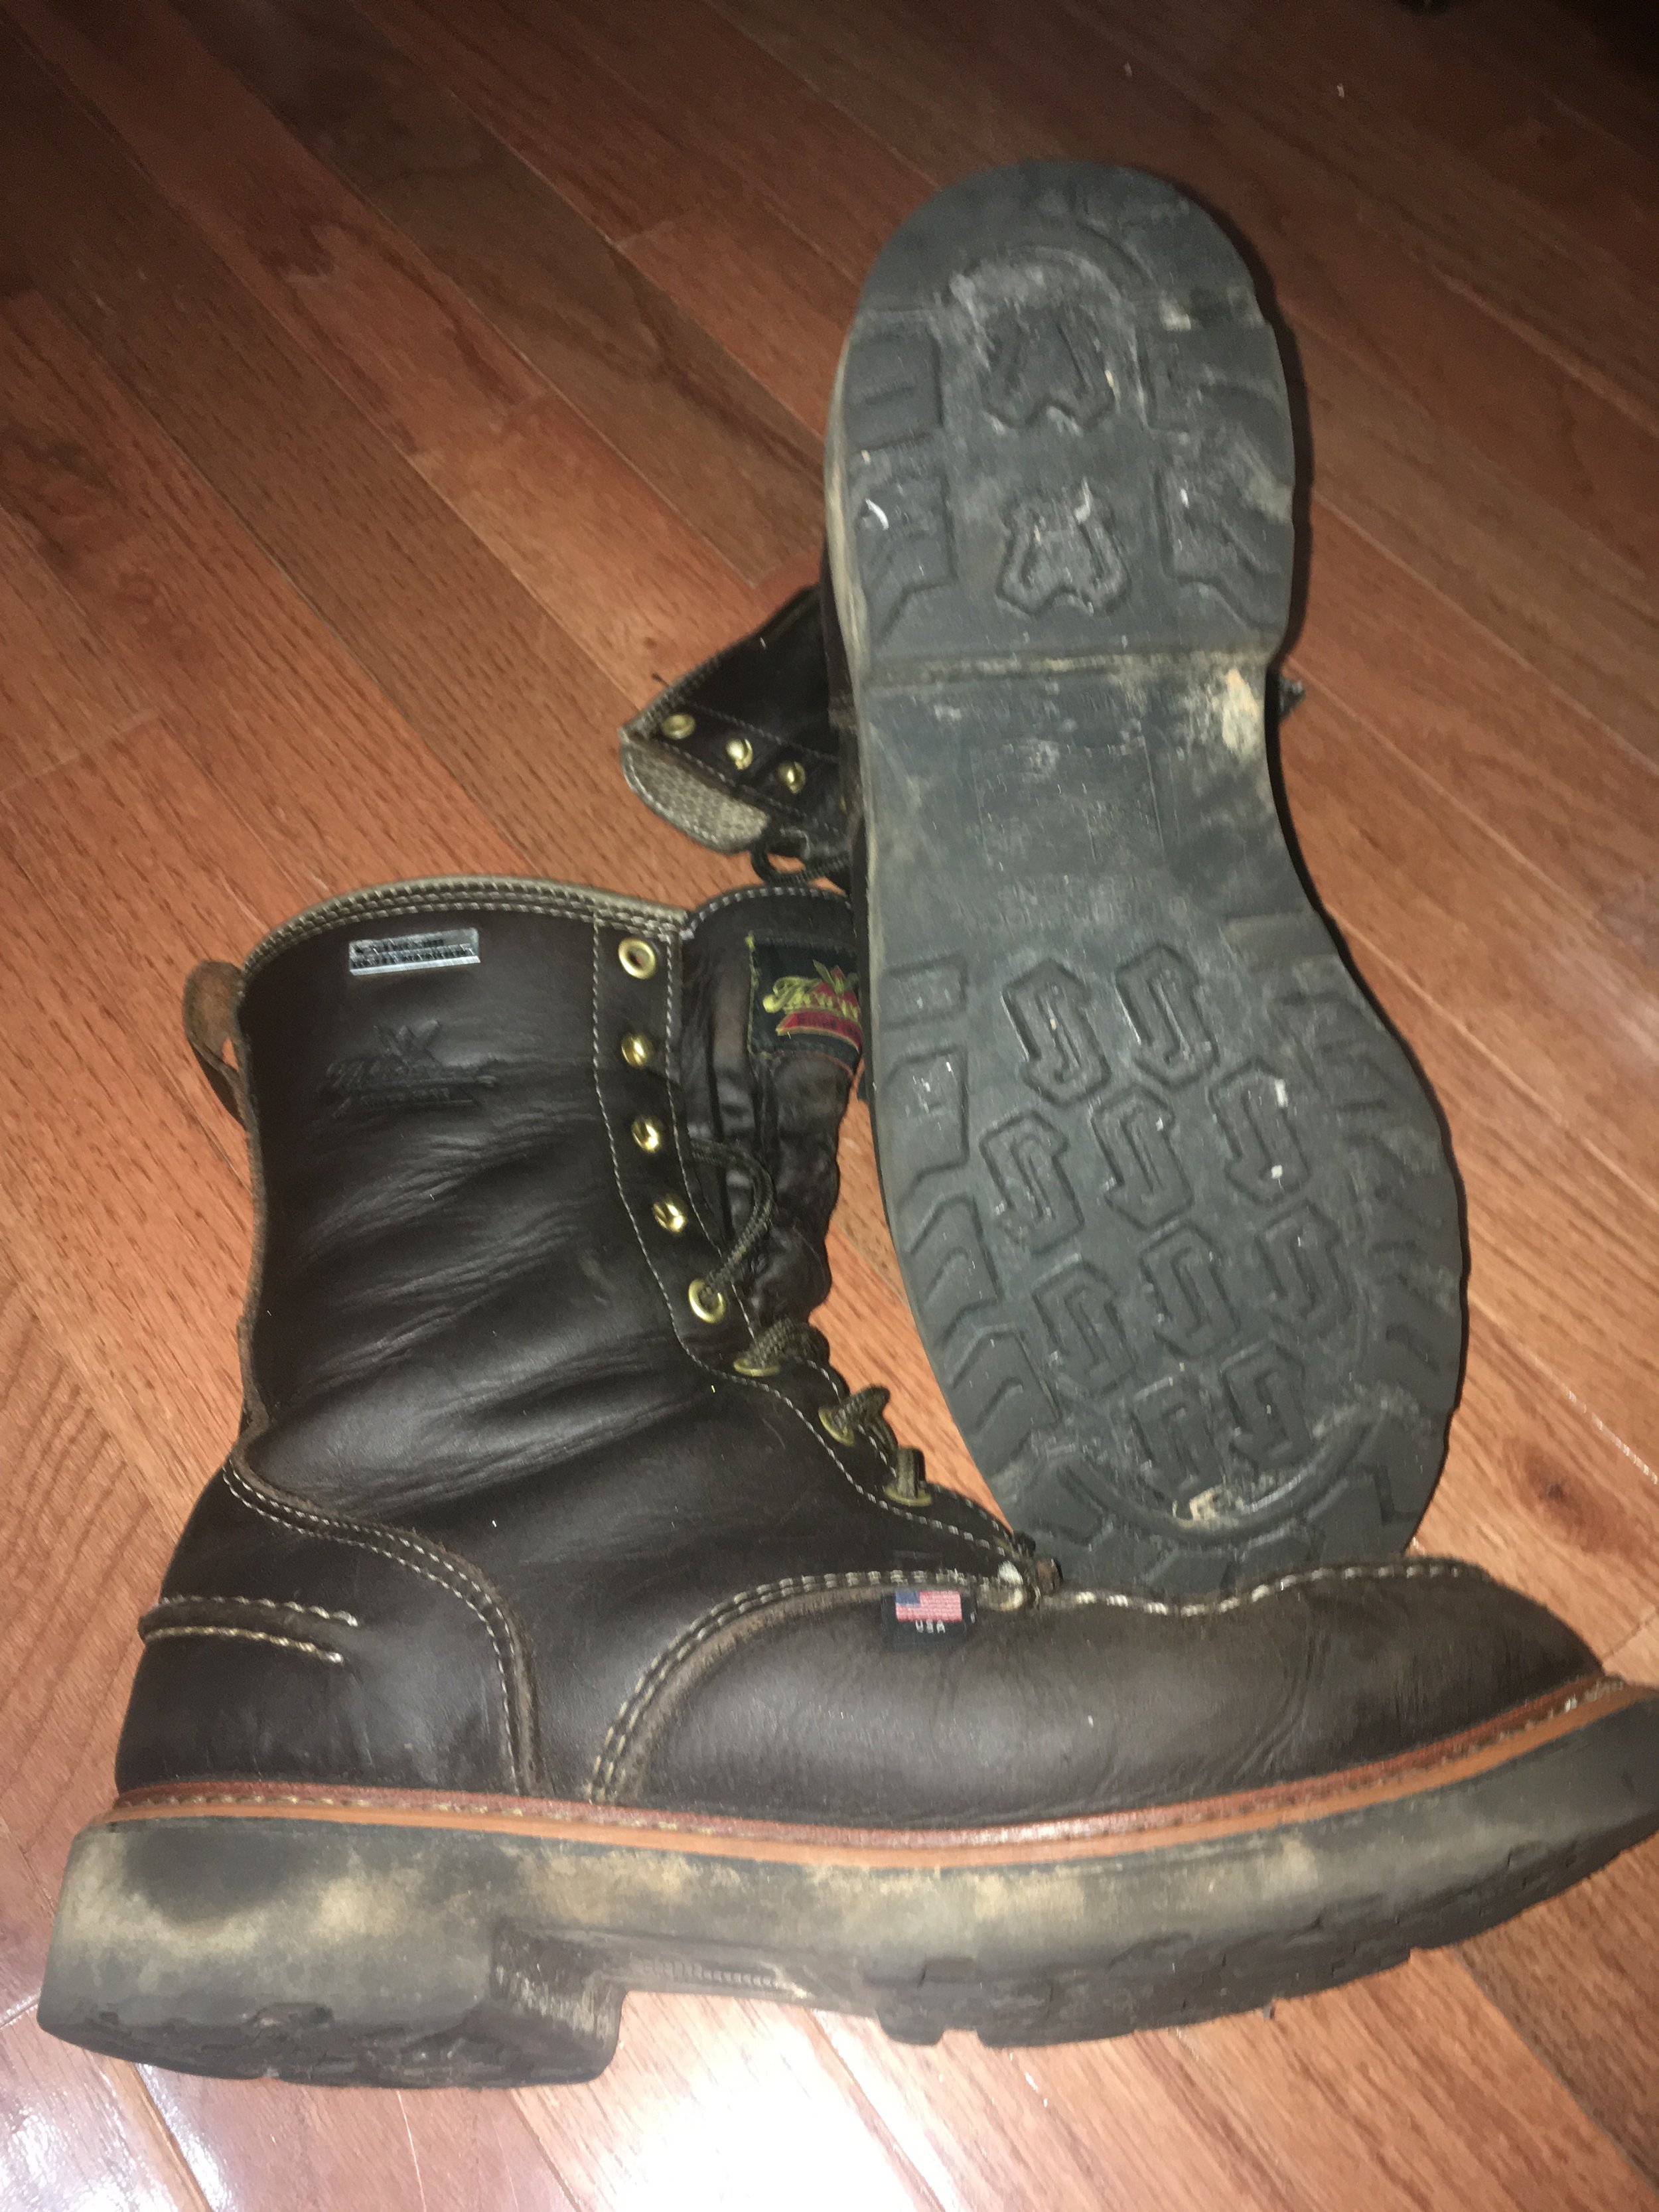 waterproofing thorogood boots